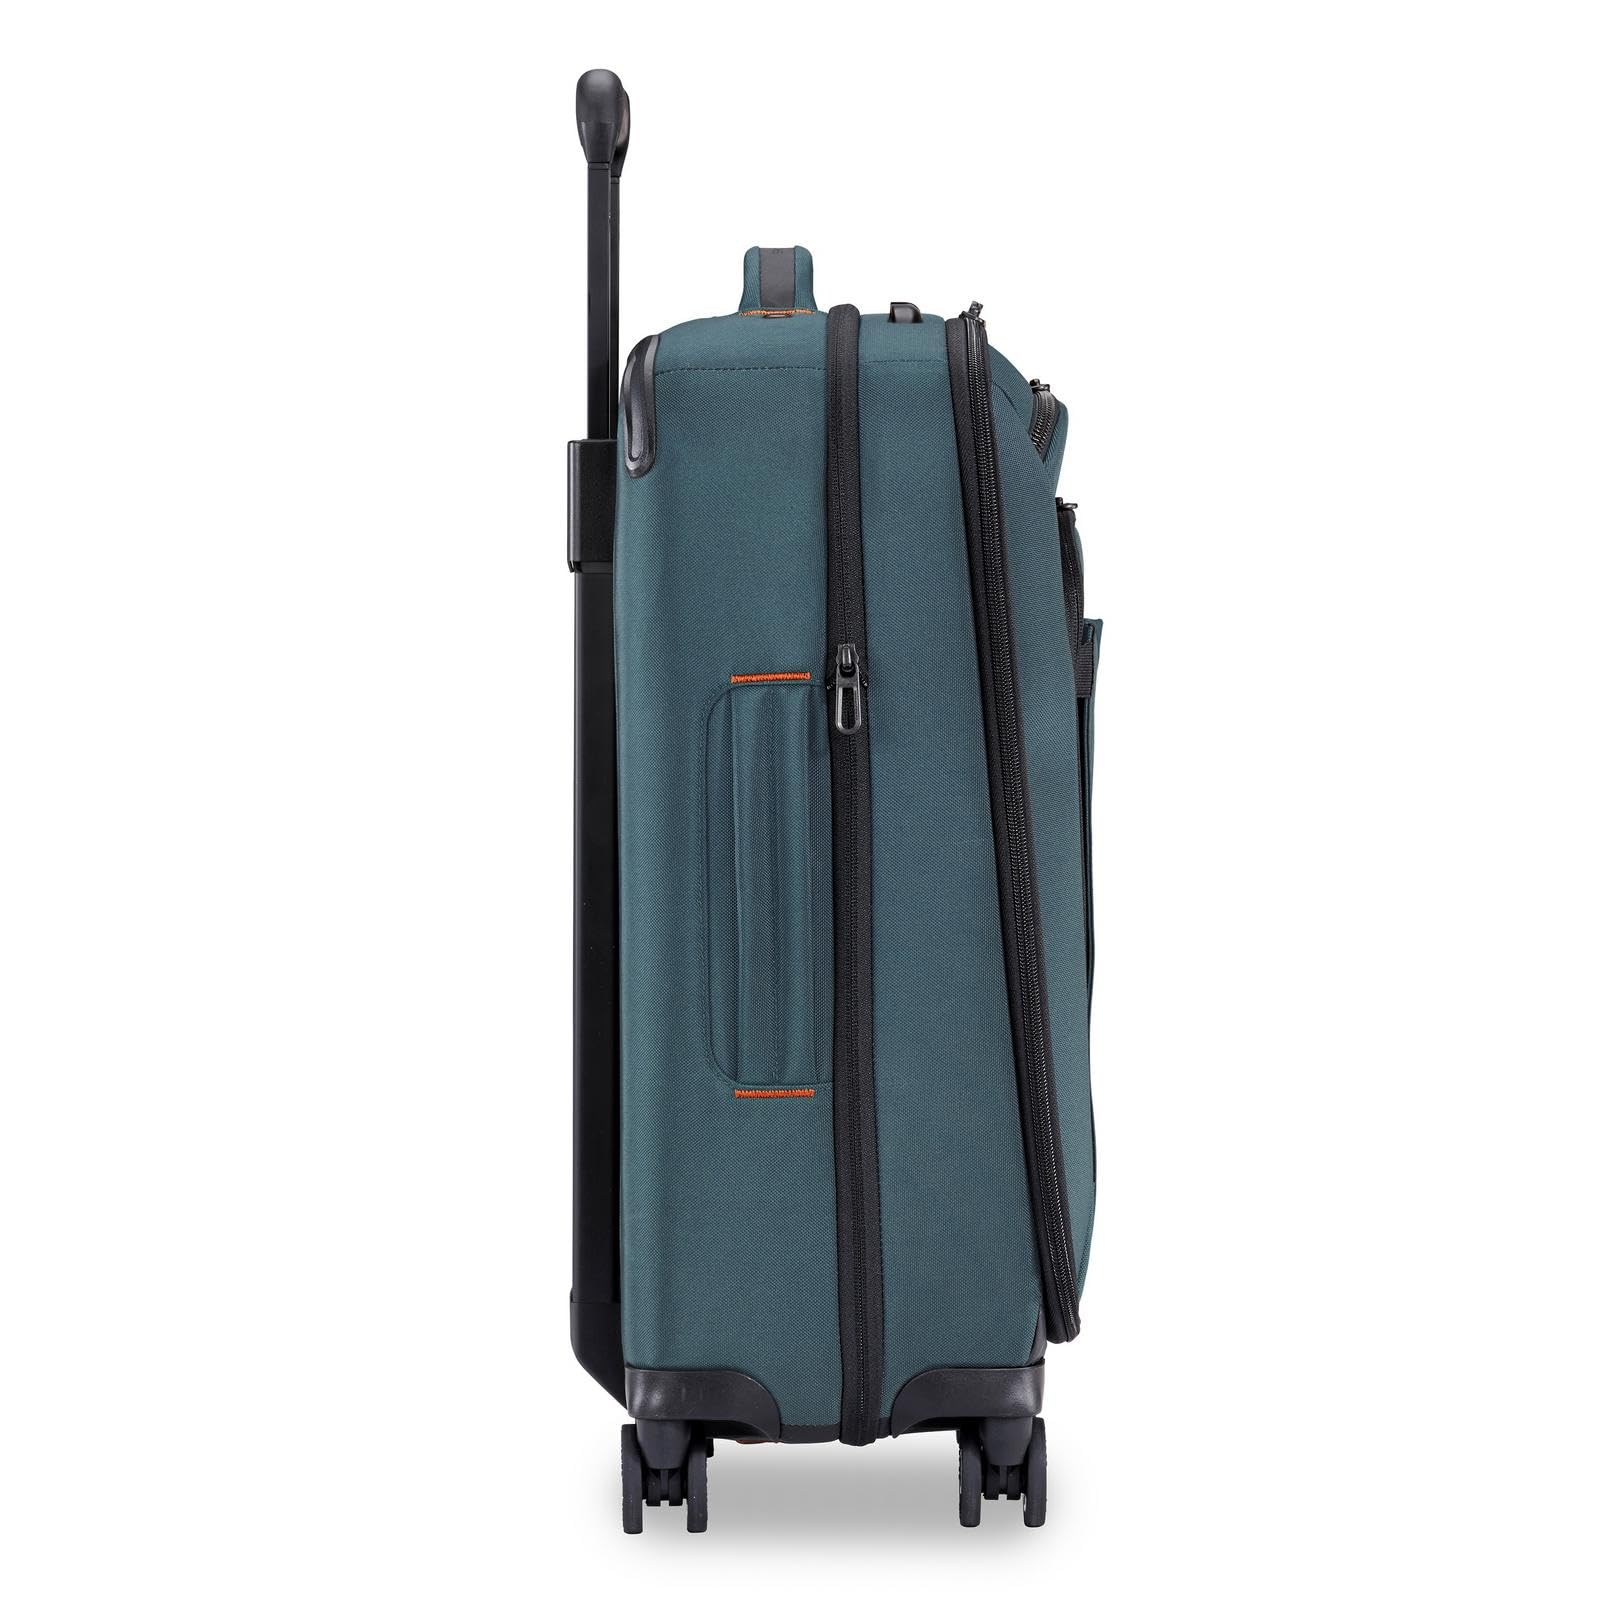 Briggs & Riley ZDX Luggage, Ocean, Carry-On 22 Inch